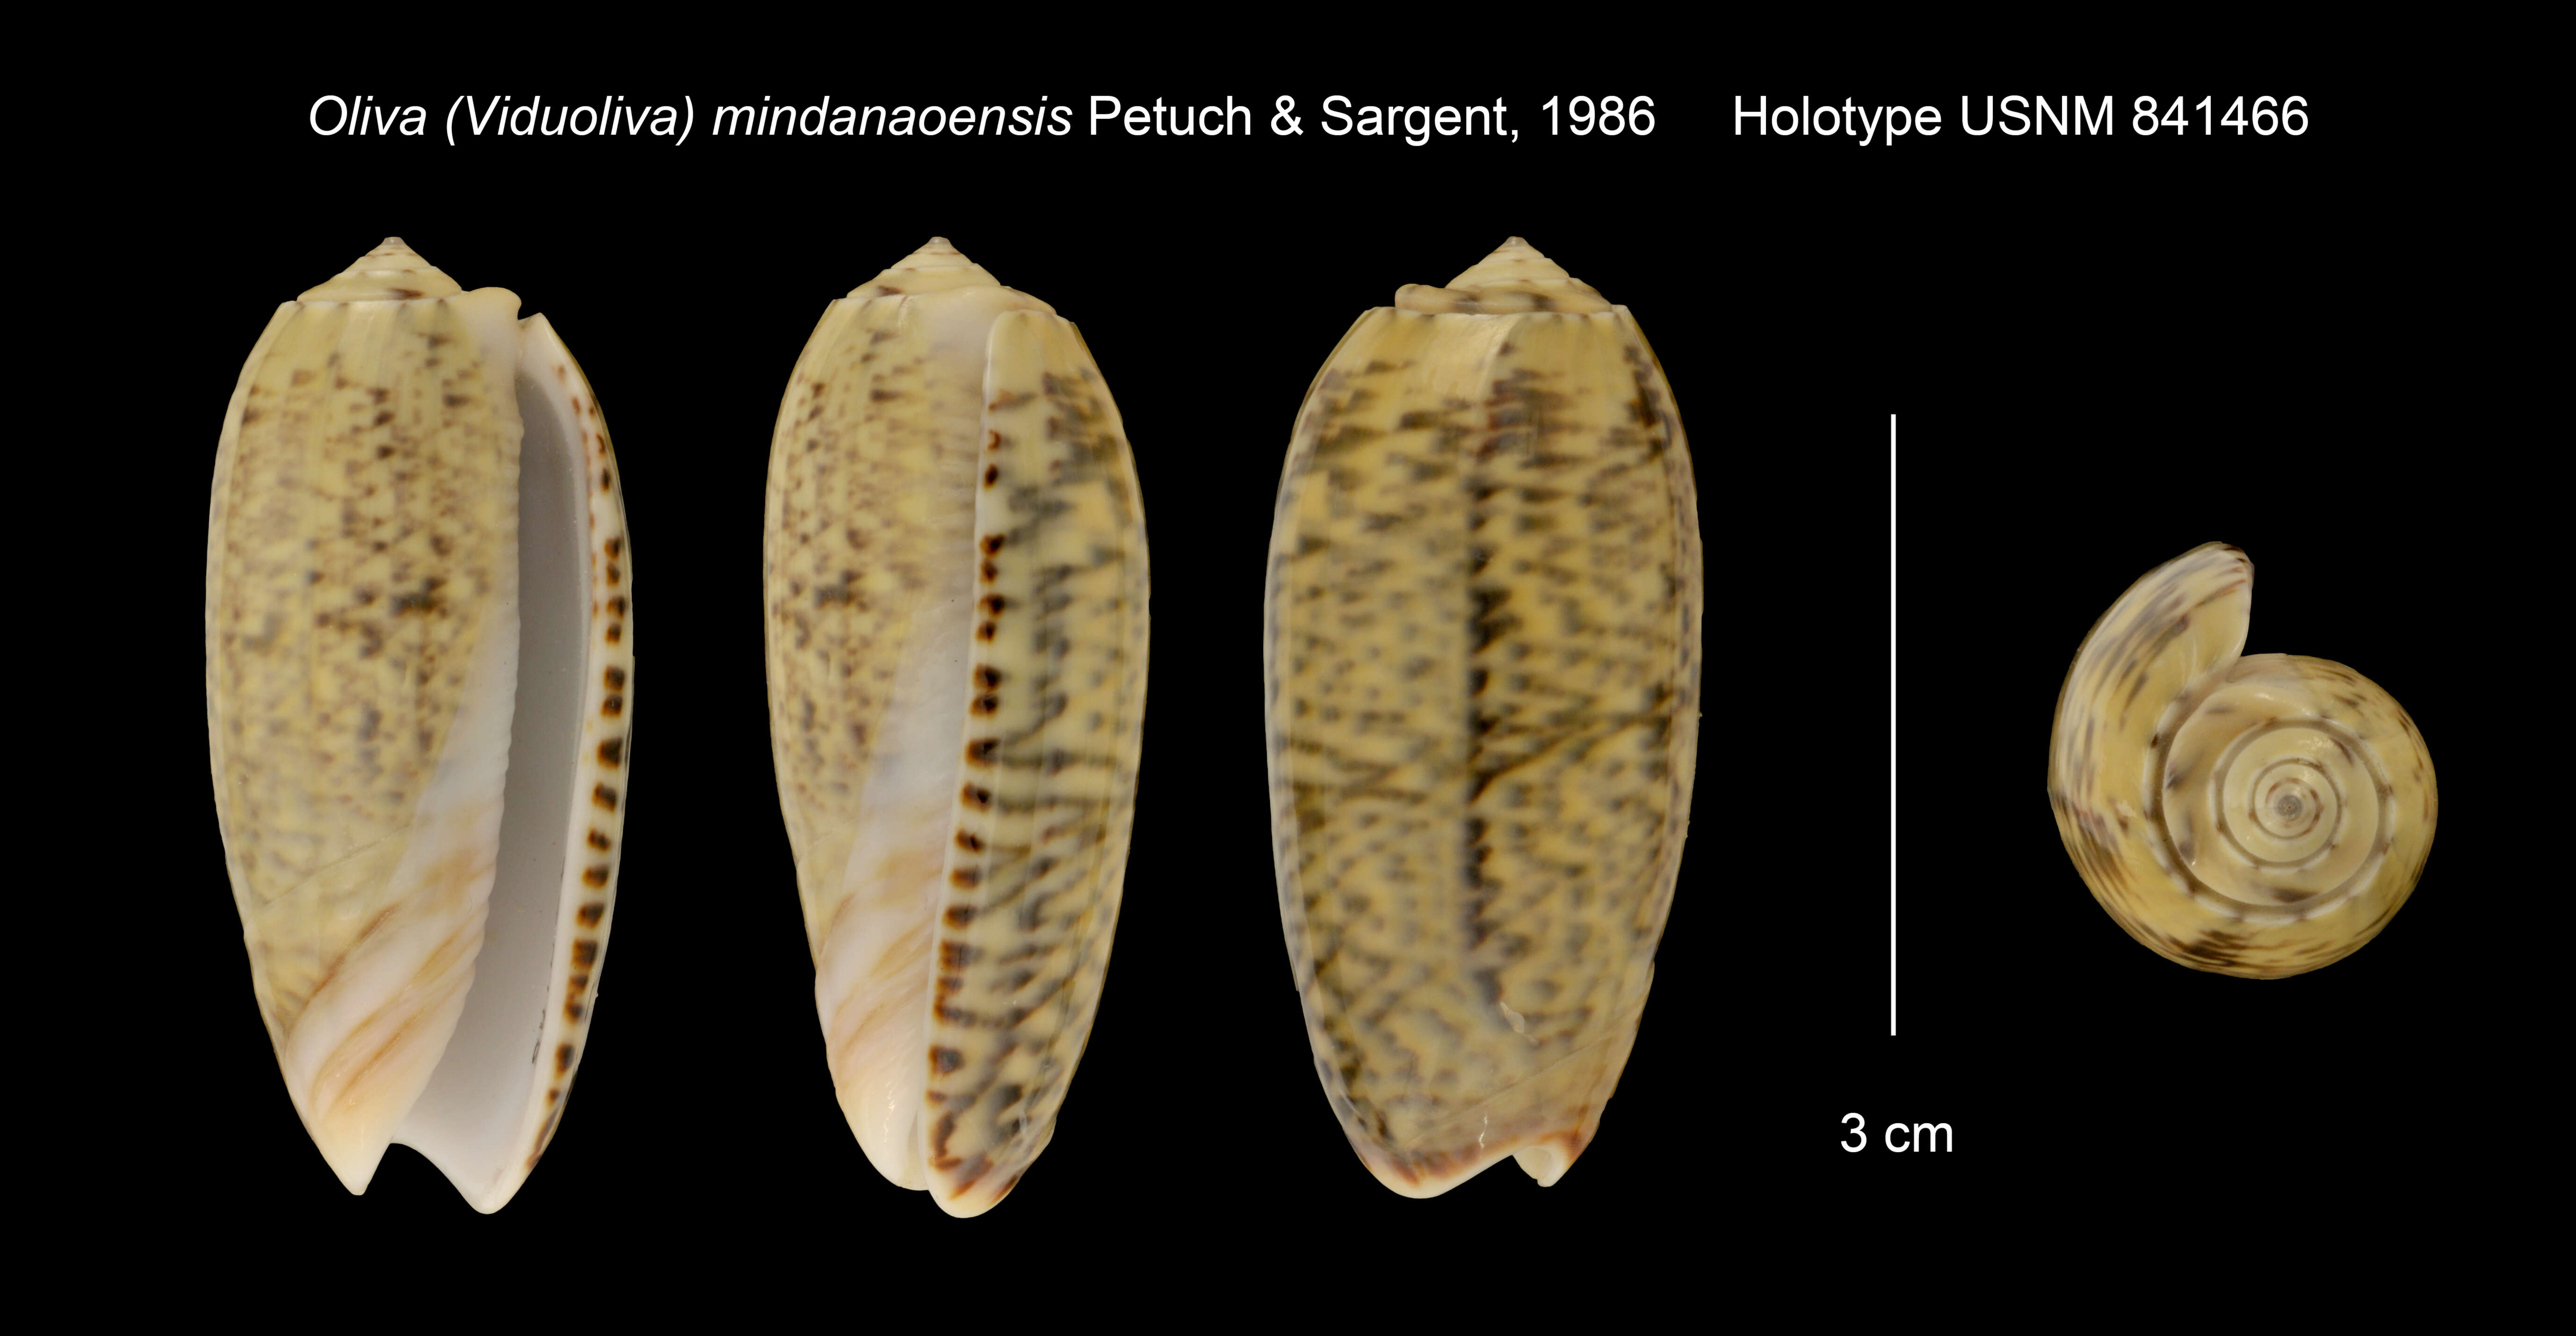 Image of Oliva mindanaoensis Petuch & Sargent 1986